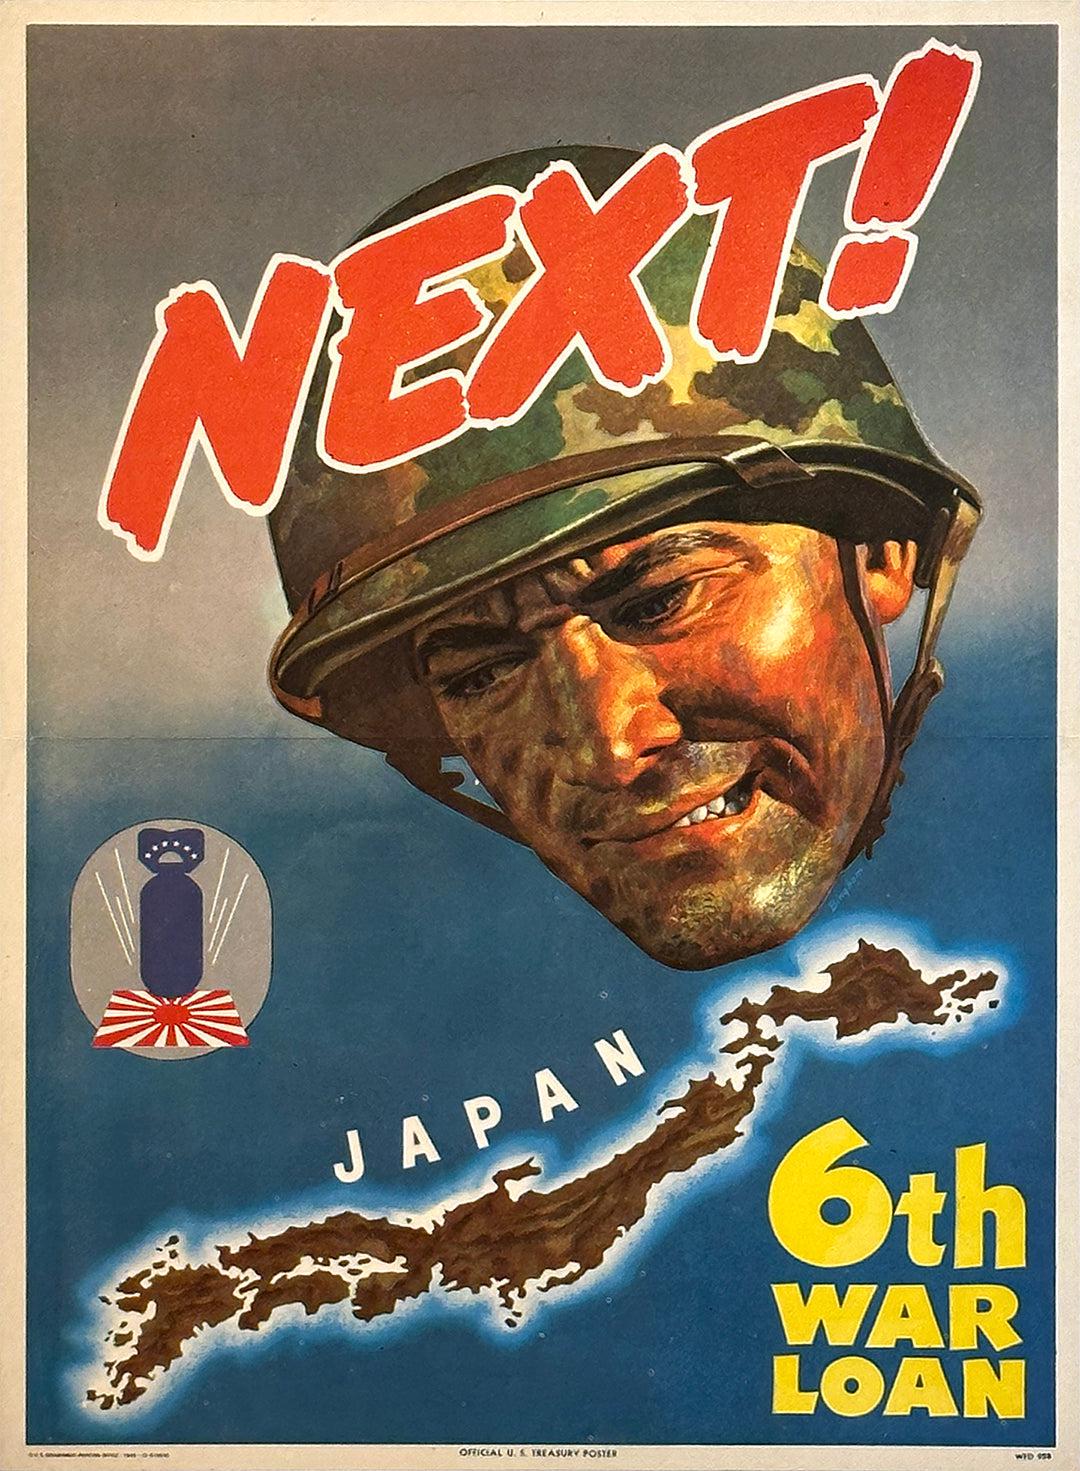 Original American WWII 1944 Poster by Bingham - Next 6th War Loan